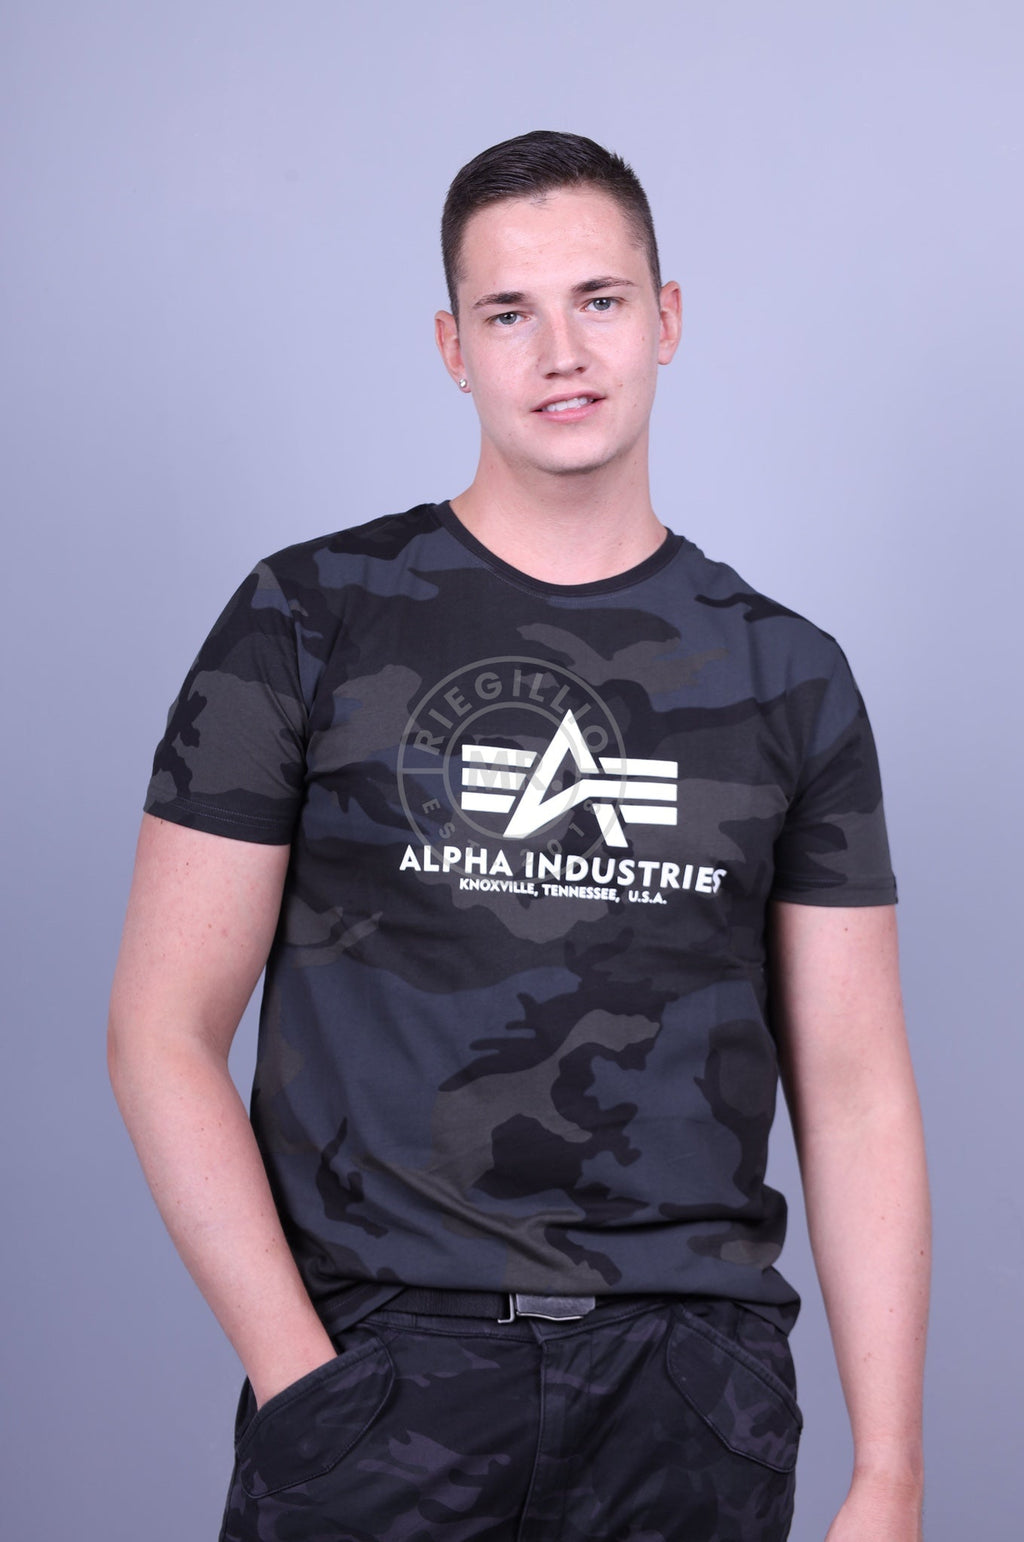 Industries MR. Alpha Riegillio at Basic Black Camo T-Shirt